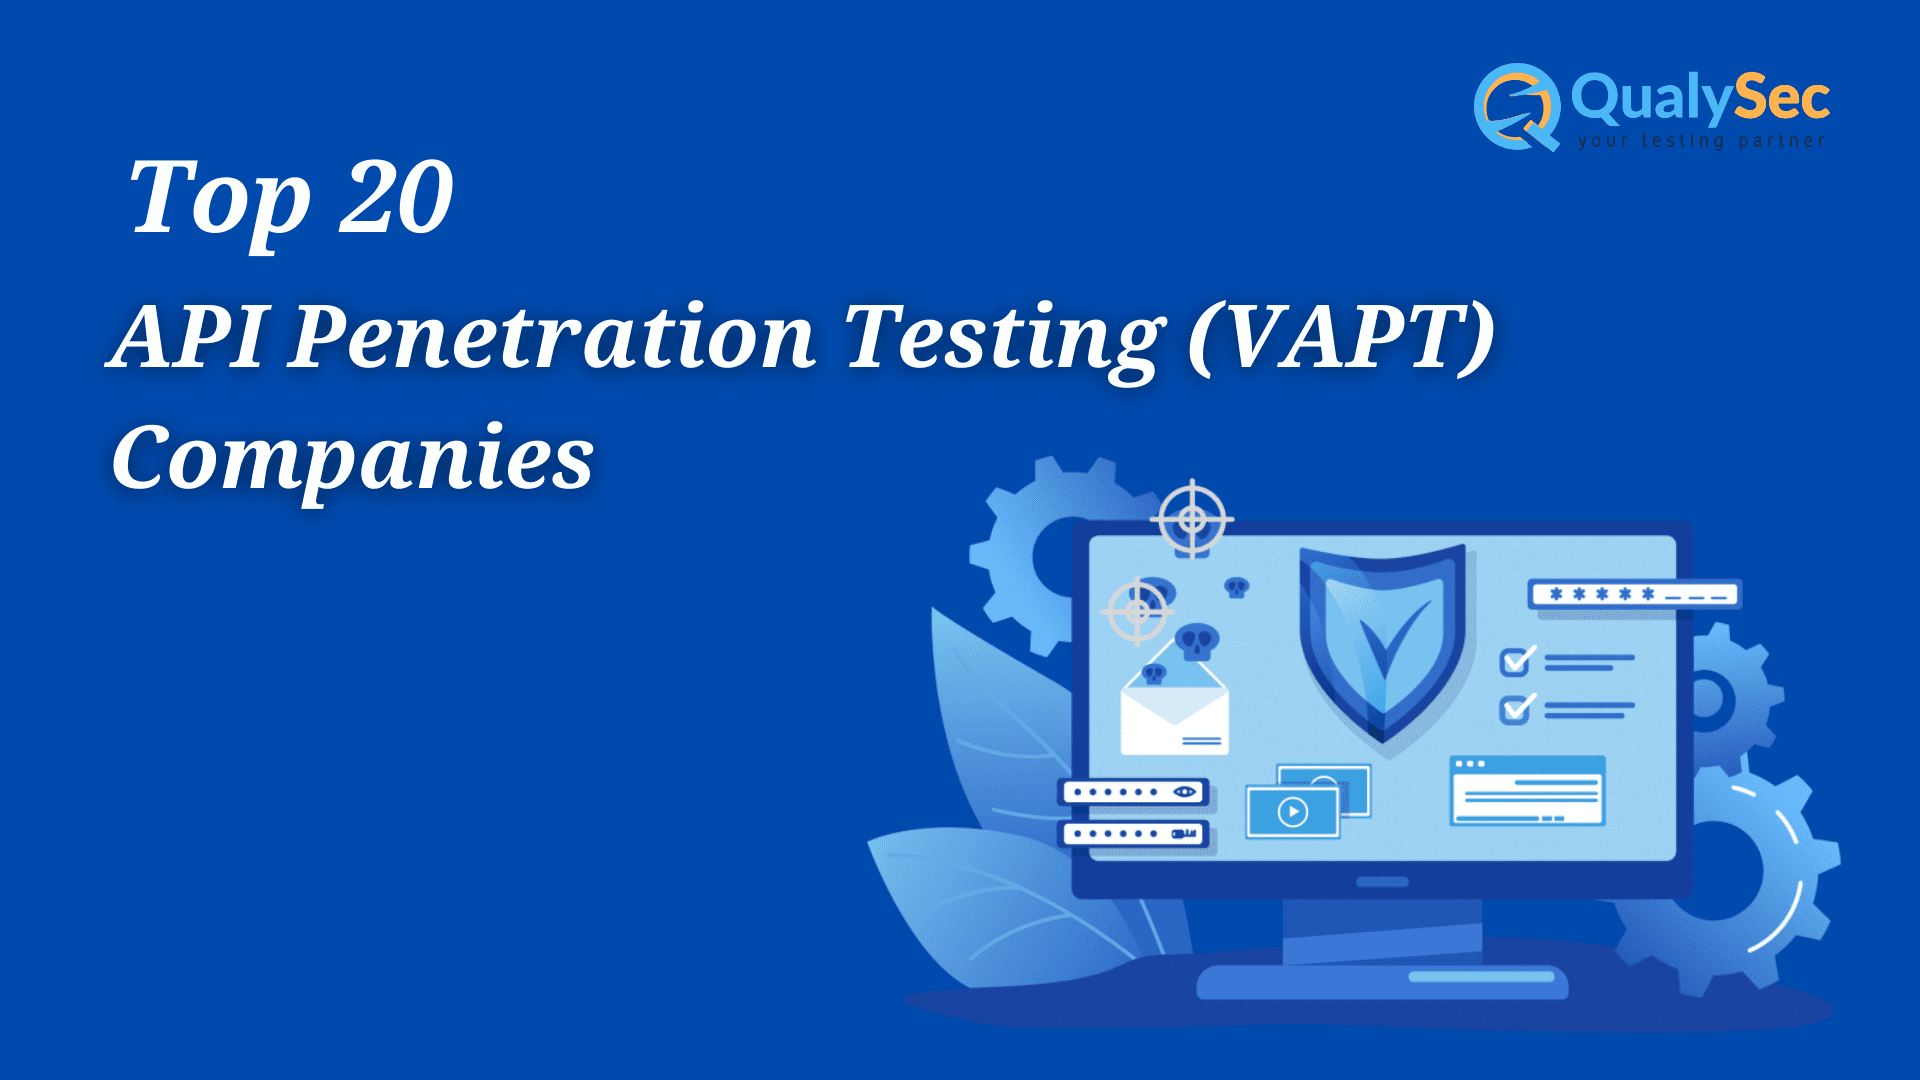 Top 20 API Penetration Testing (VAPT) Companies in 2022